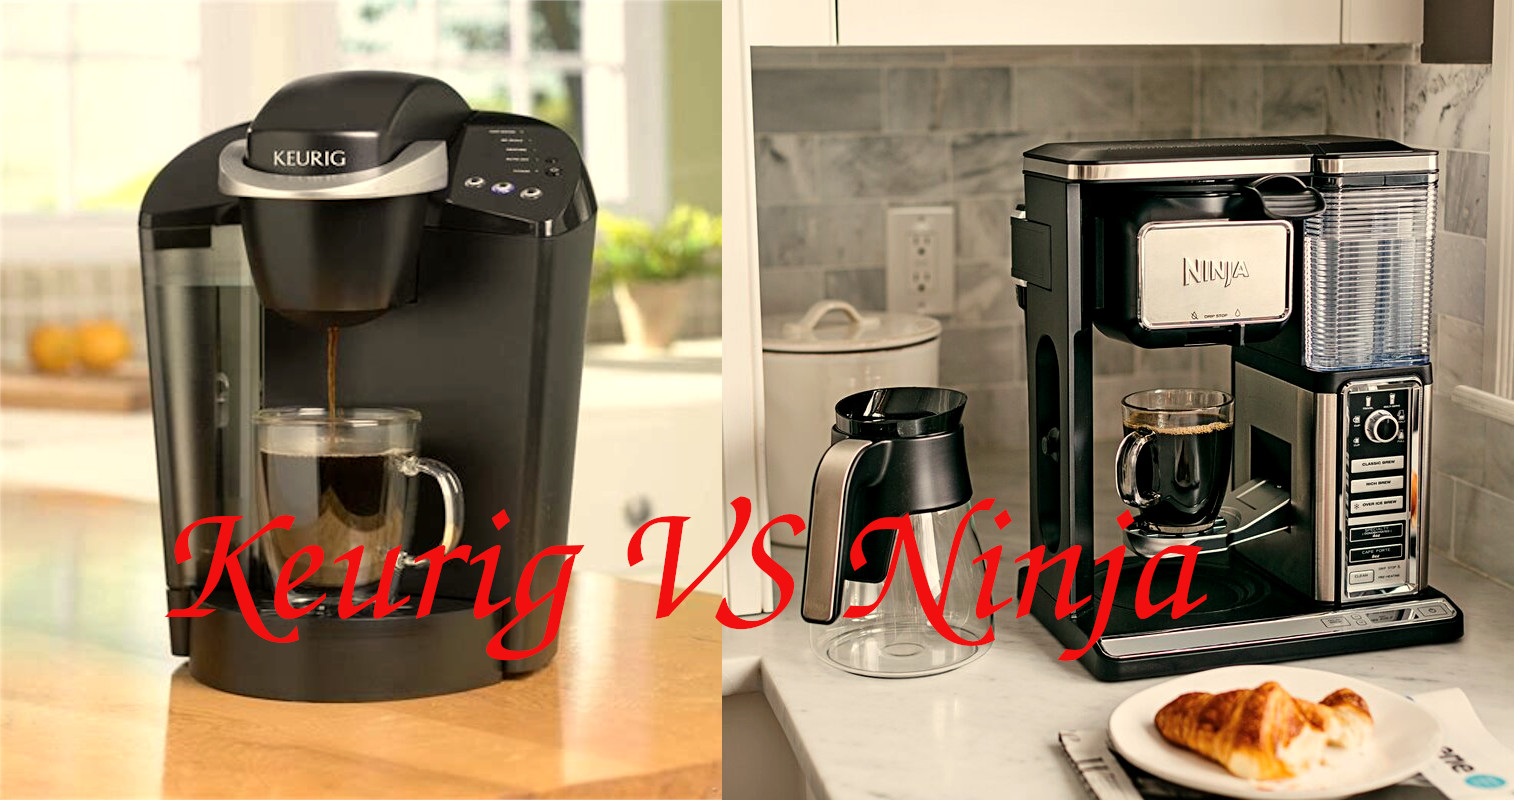 NINJA vs Keurig Coffee Maker Comparison #finds #founditon